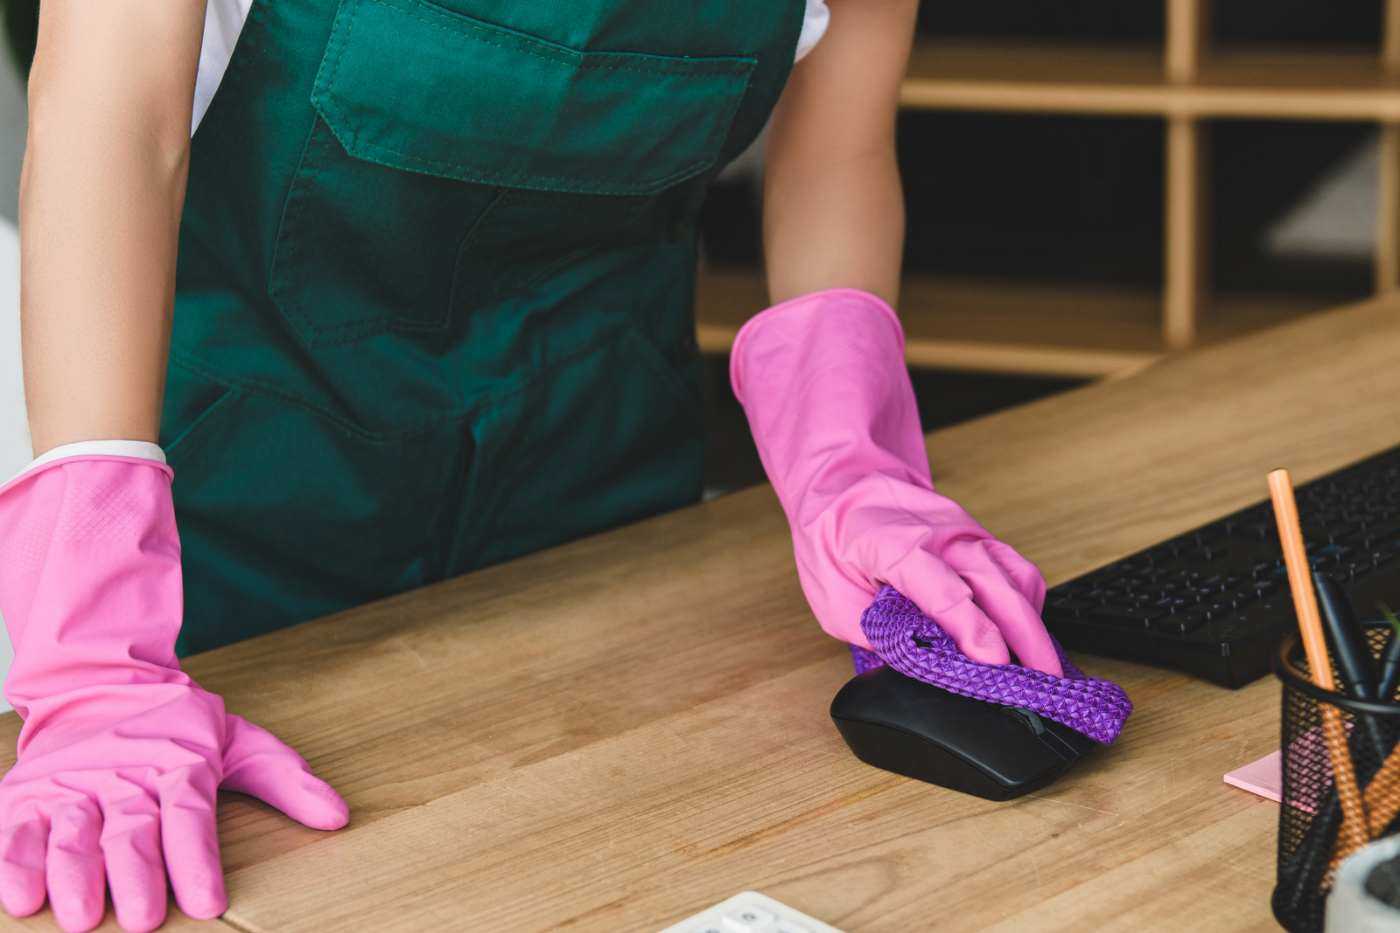 Woman Wearing Rubber Gloves Cleaning Office Desk